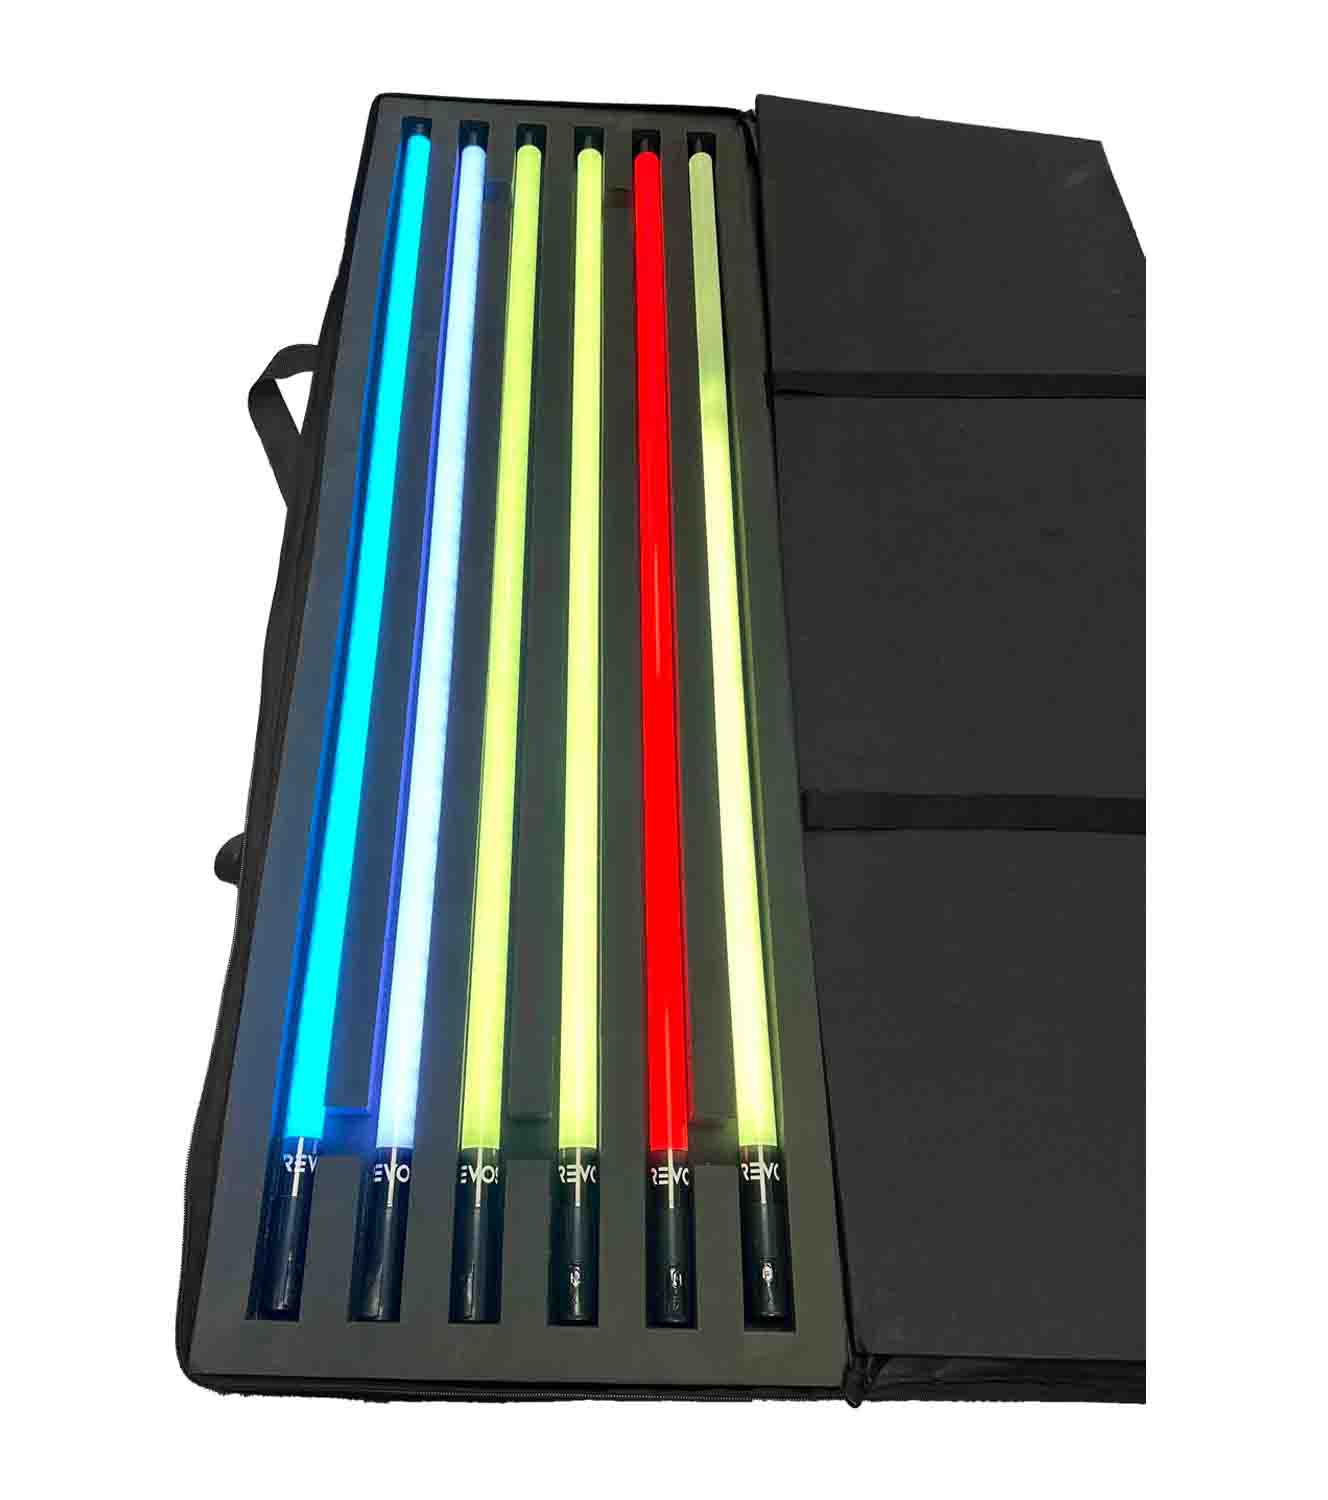 RevoSpin RGB Tube Bar Lights Set Of 6 Plus Travel Bag - Hollywood DJ